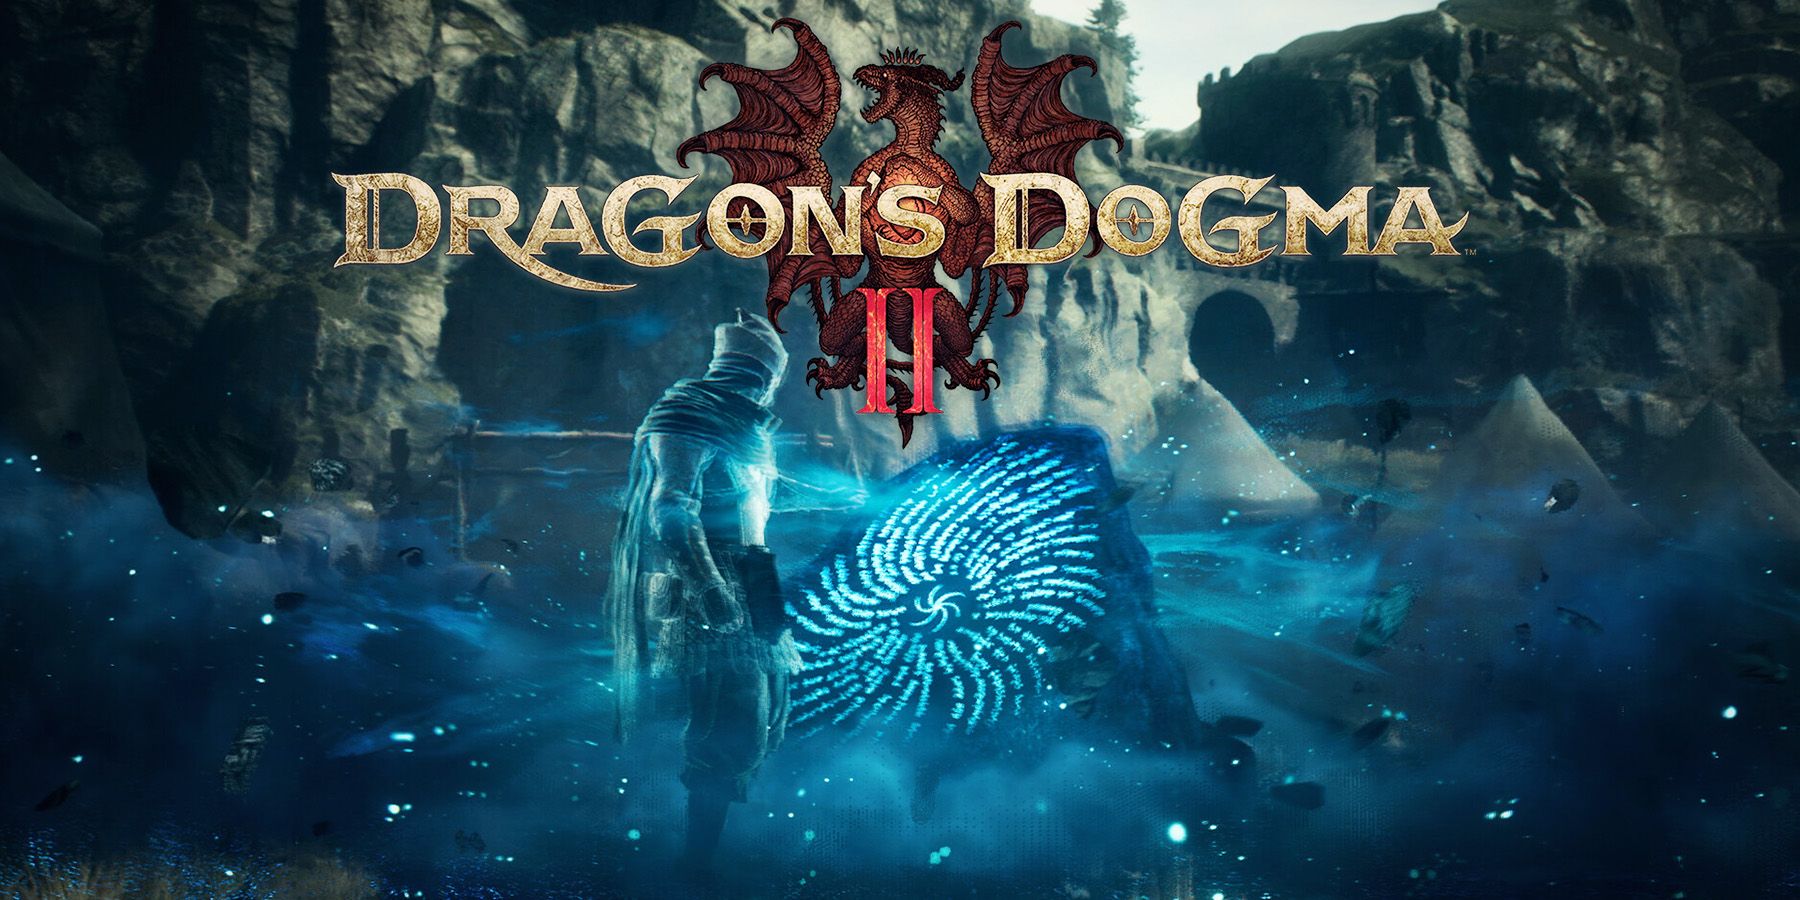 Dragon's Dogma 2 blue magic stone approach promo screenshot with game logo edit